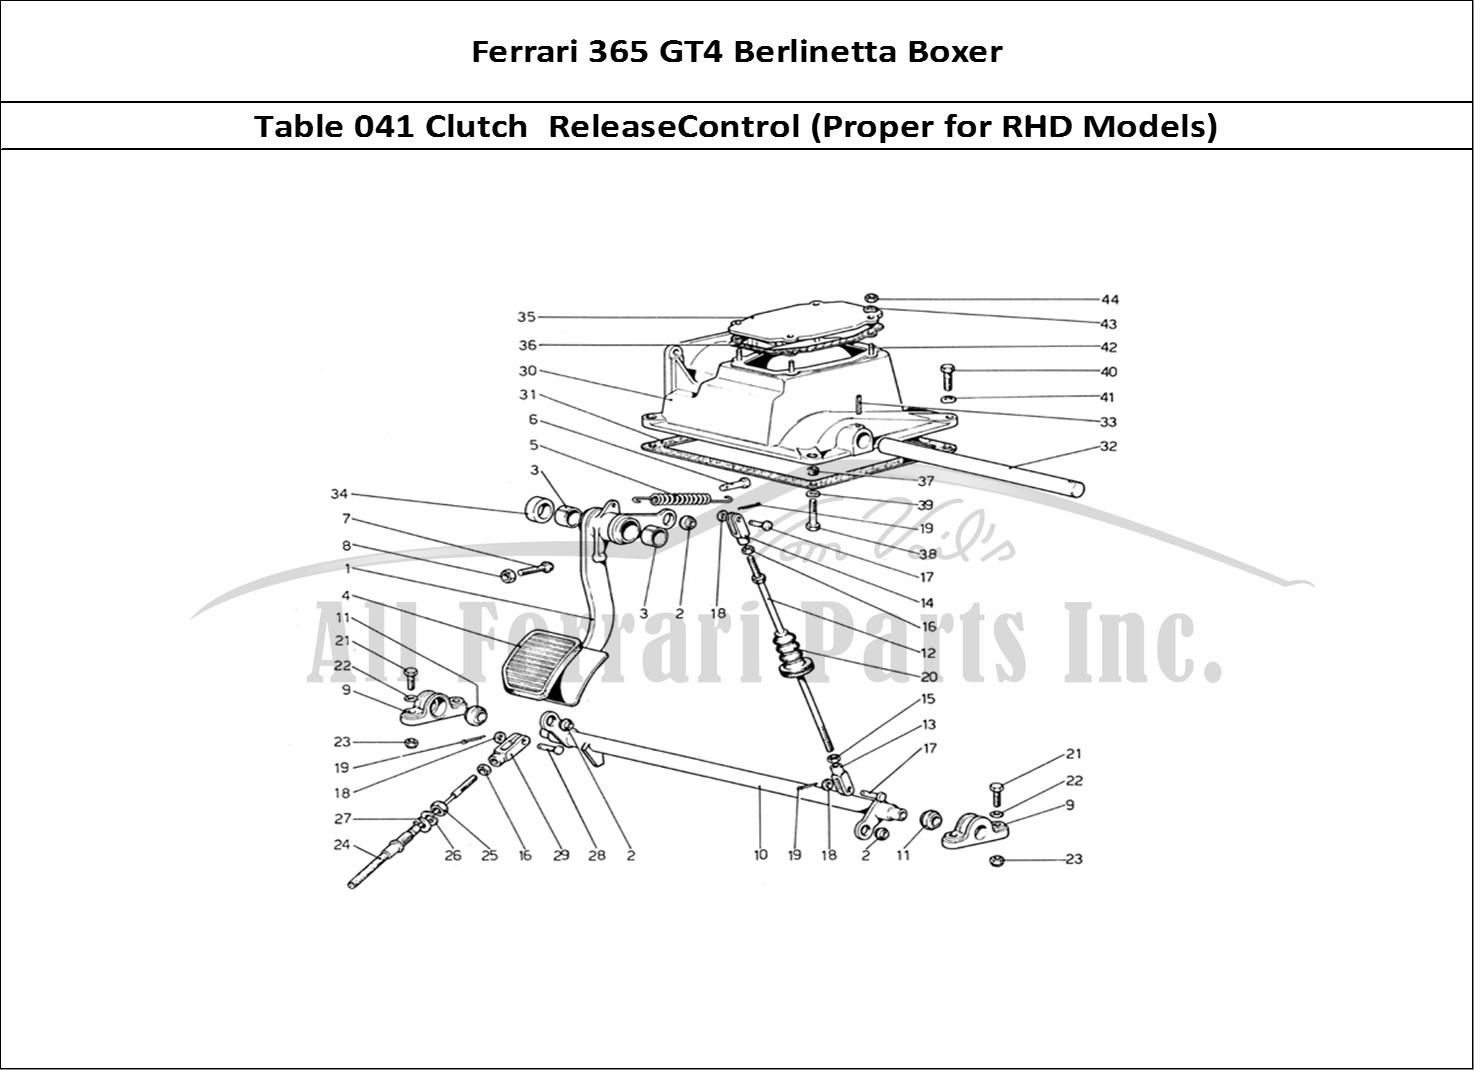 Ferrari Parts Ferrari 365 GT4 Berlinetta Boxer Page 041 Clutch Release Controll (